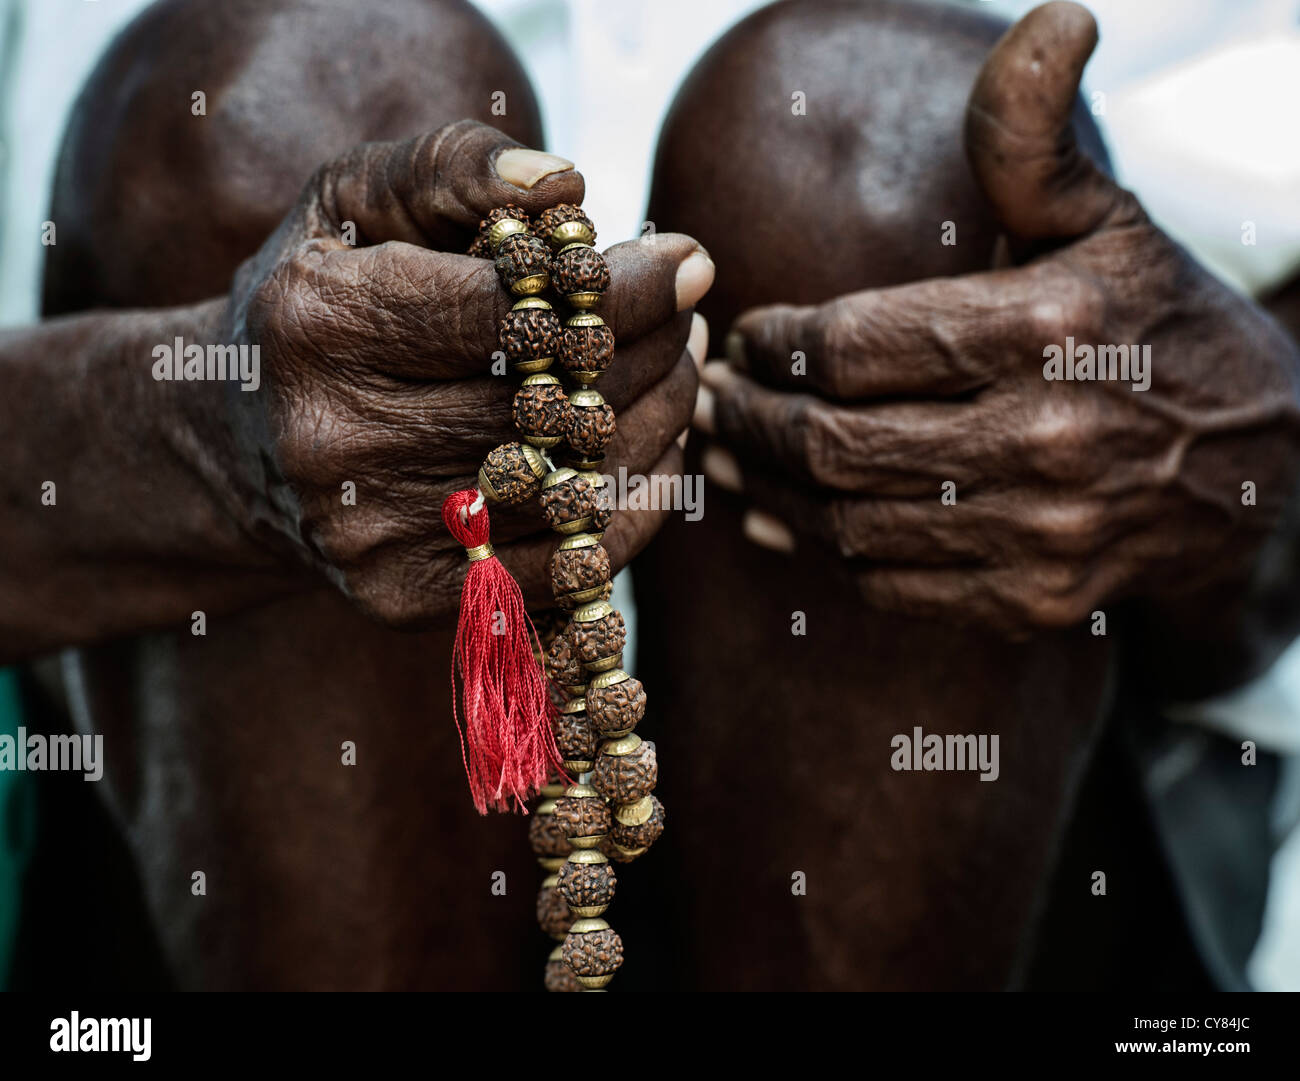 Old Indian mans hand holding Indian Rudraksha / Japa Mala prayer beads Stock Photo